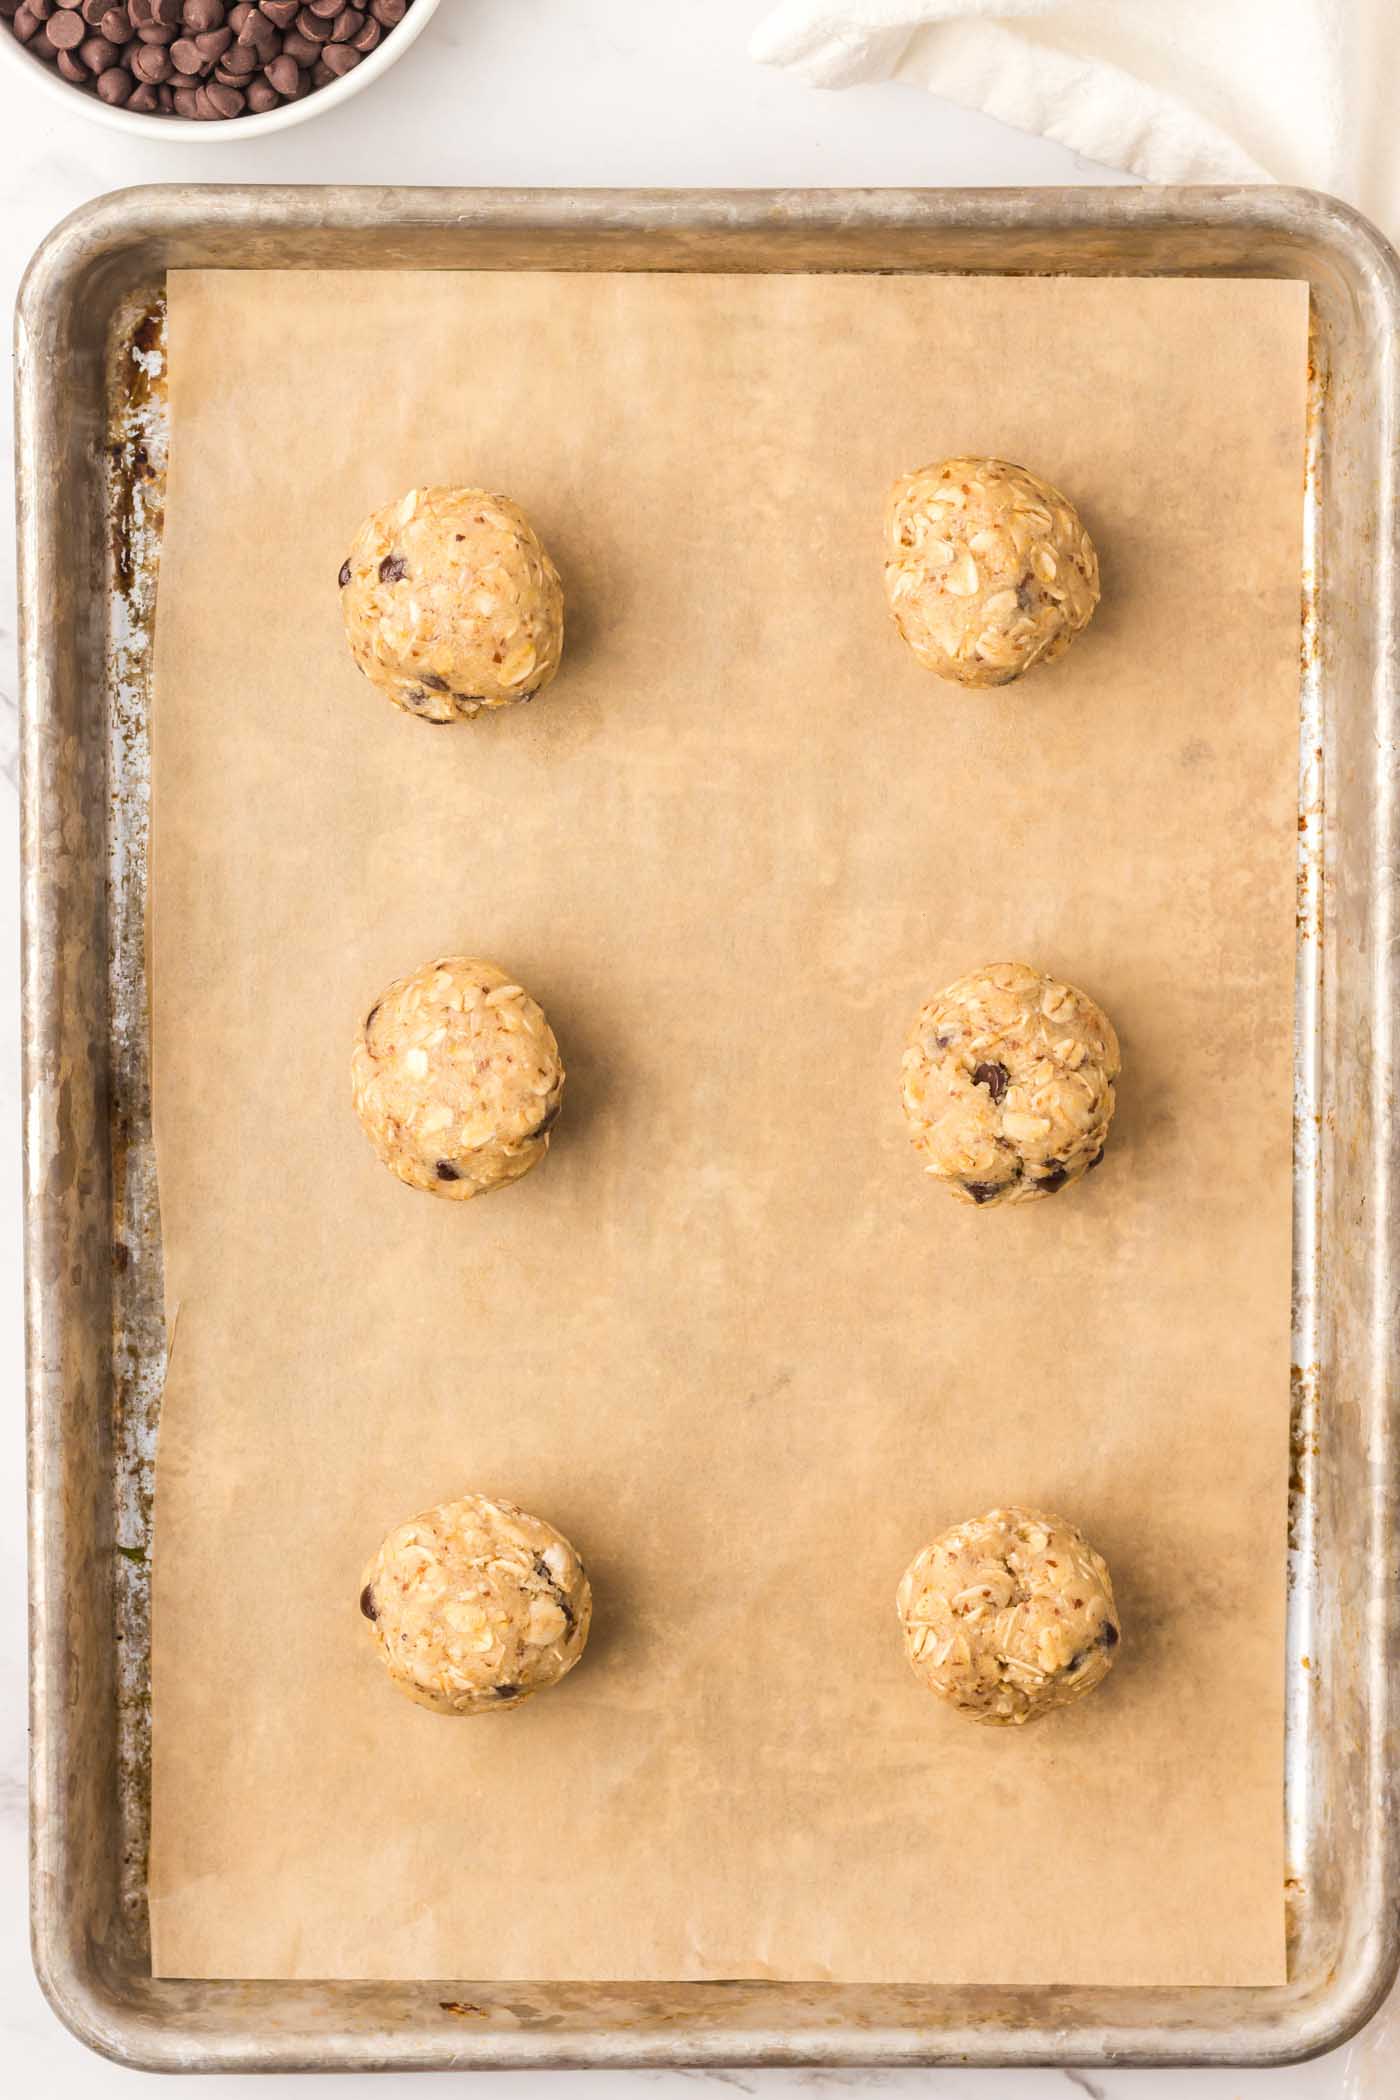 6 balls of almond flour oatmeal cookies on a baking sheet before baking.